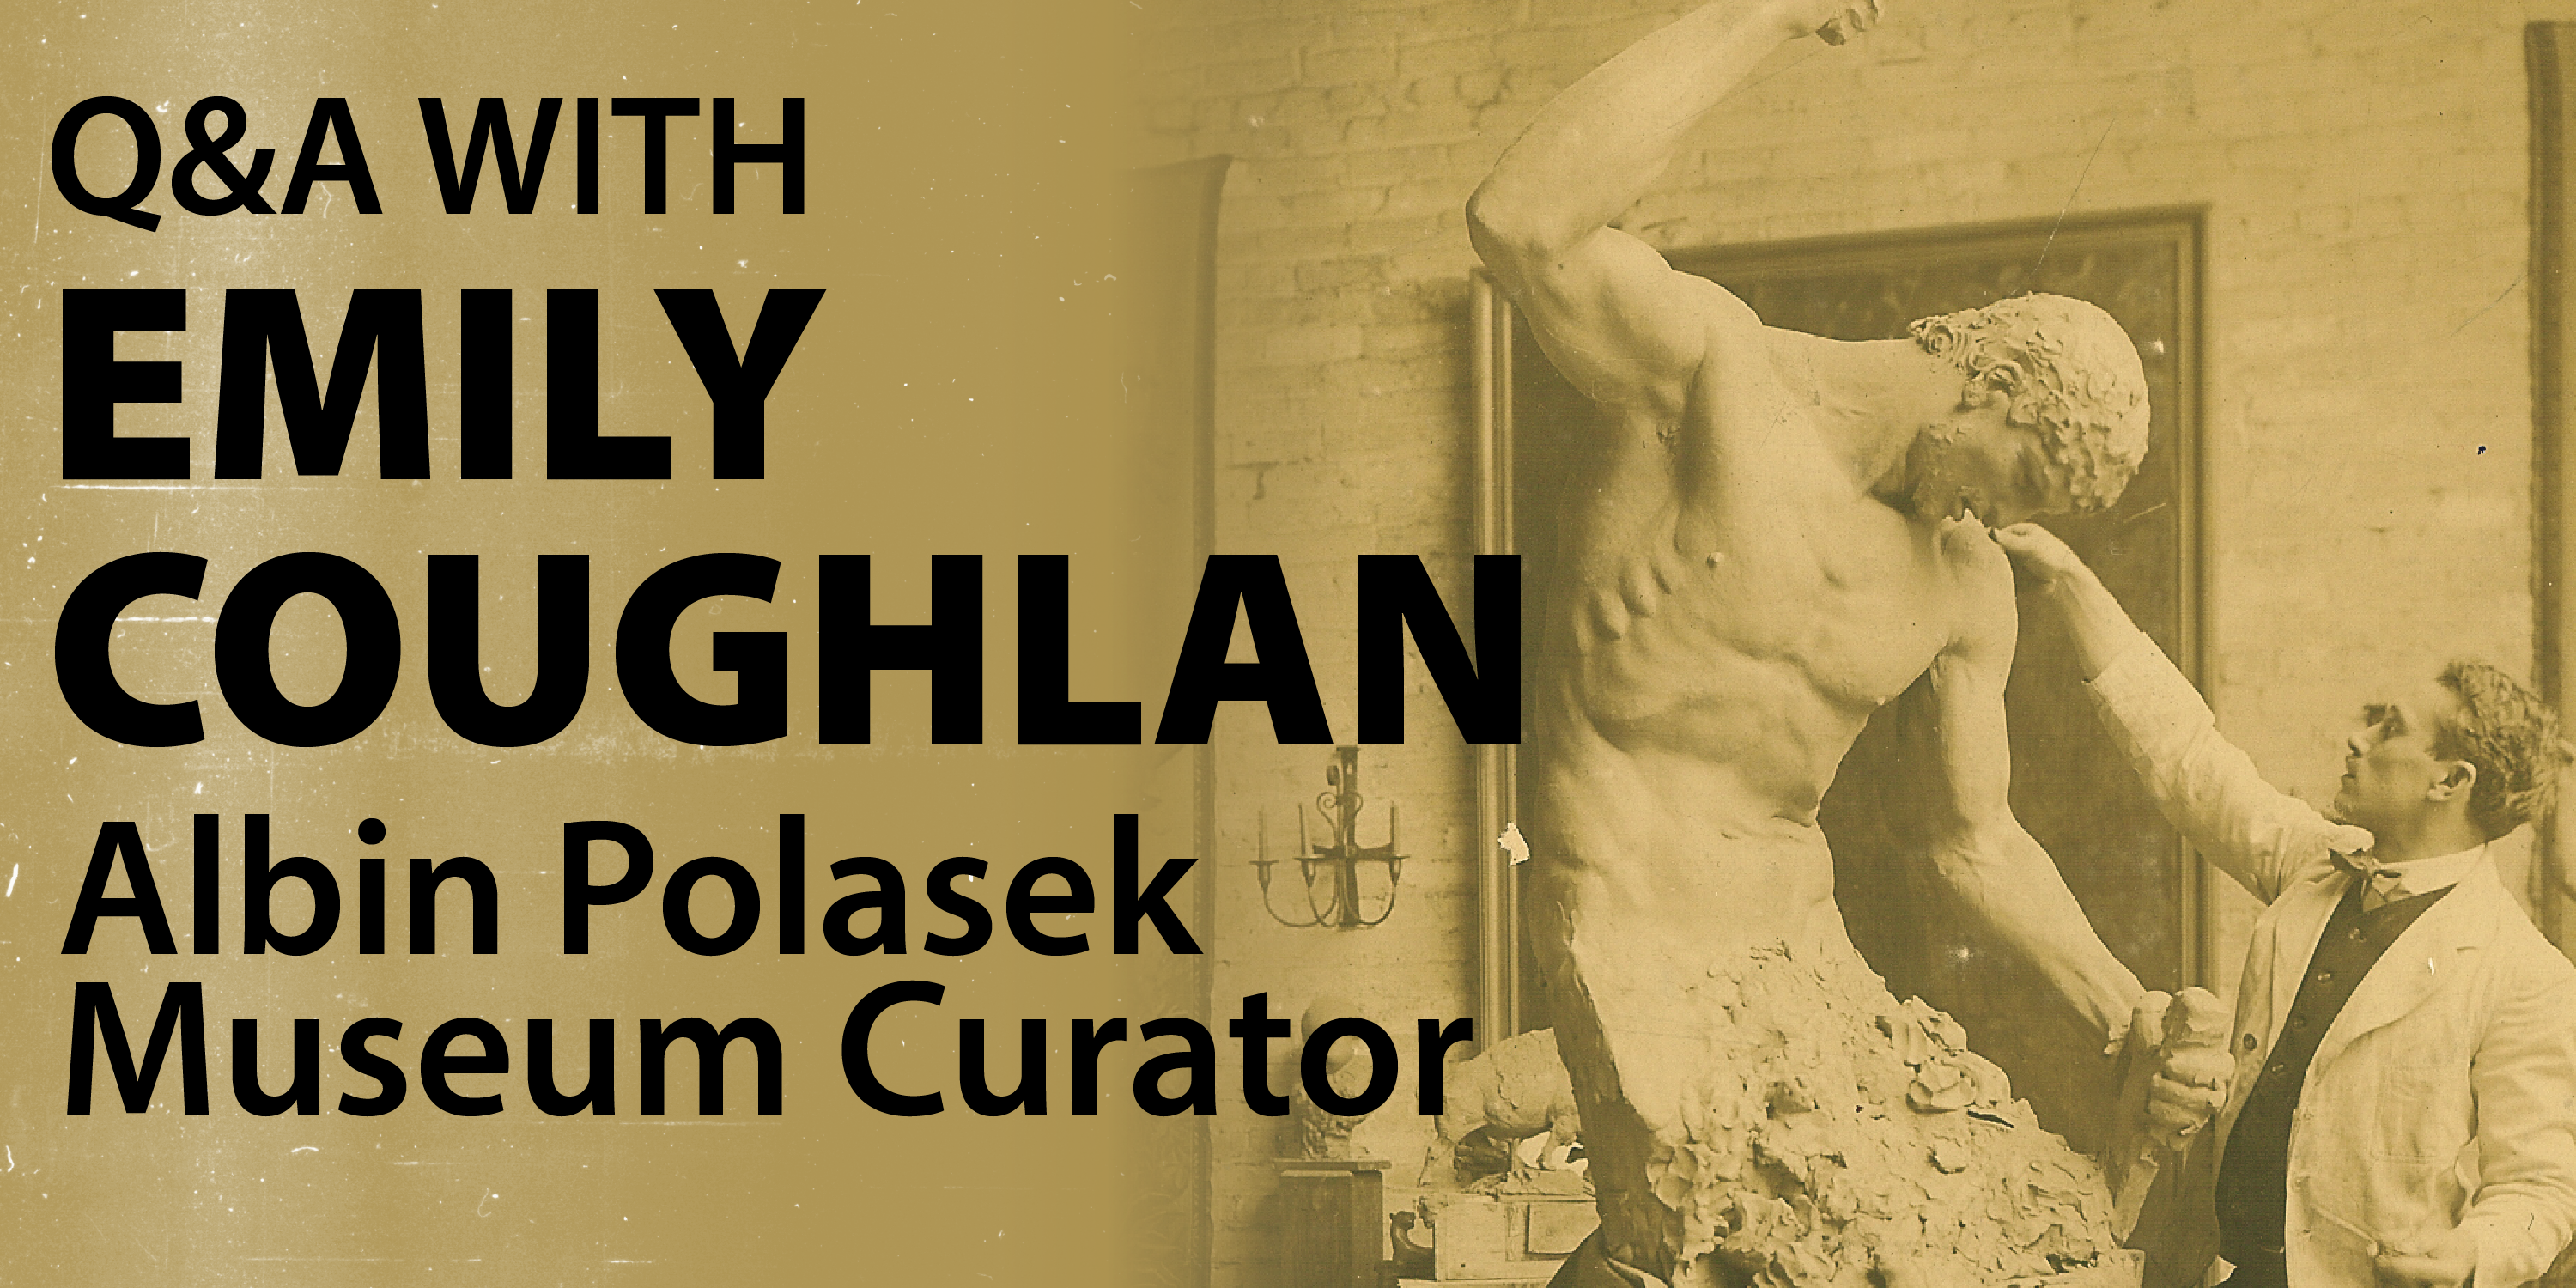 Q&A with Emily Coughlan, Albin Polasek Museum Curator